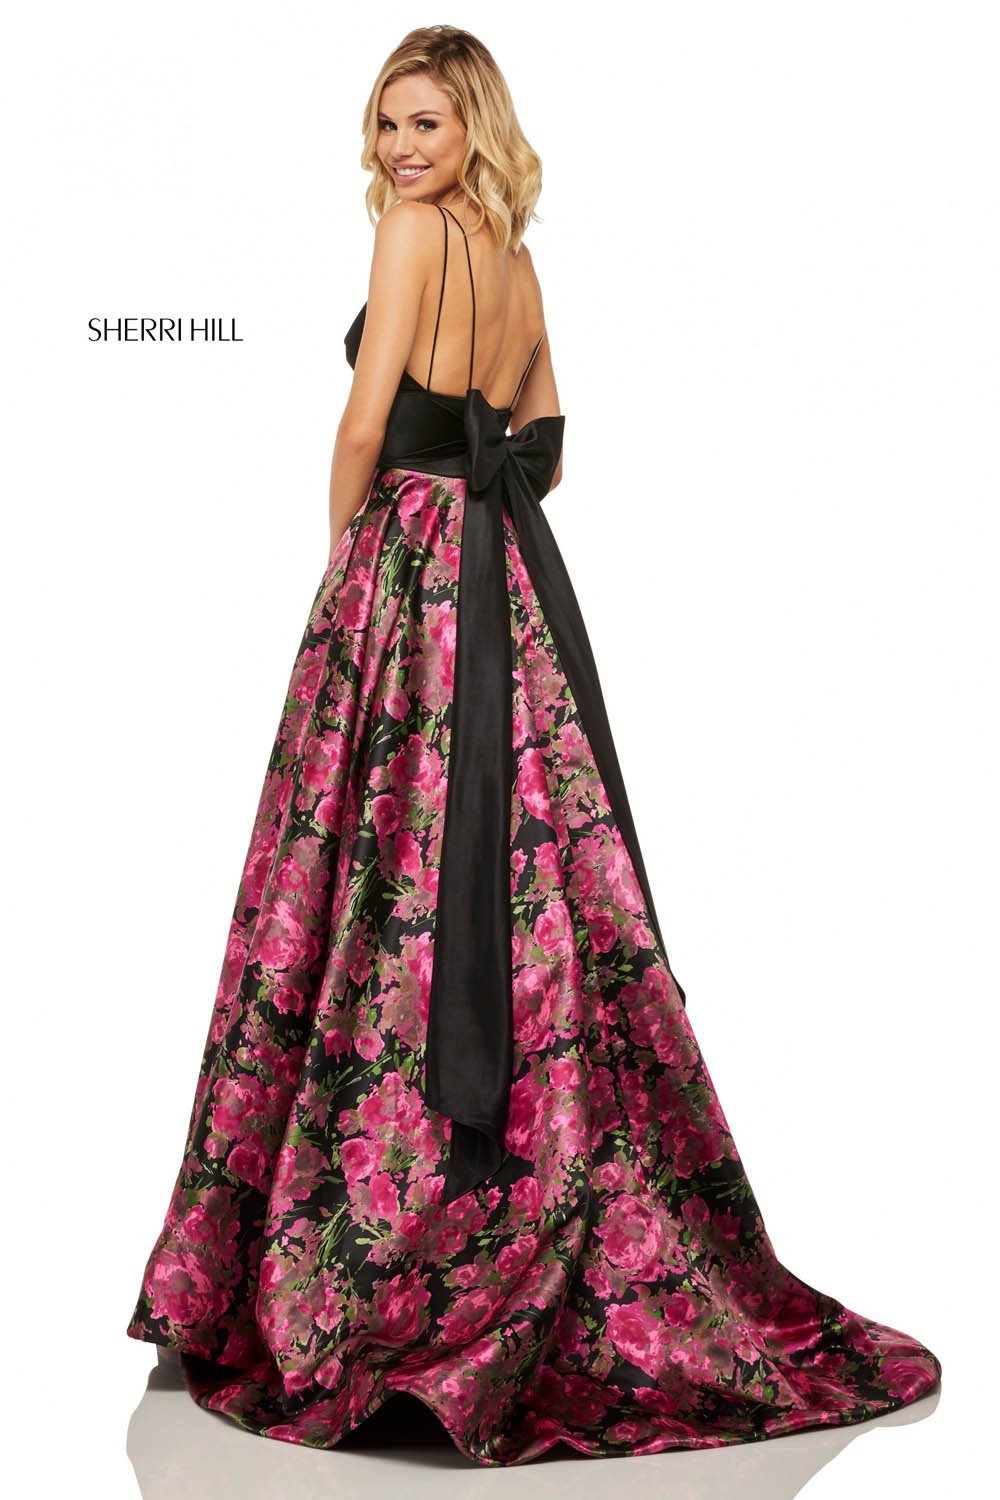 Sherri Hill 52931 dress images in these colors: Black Fuchsia Print.